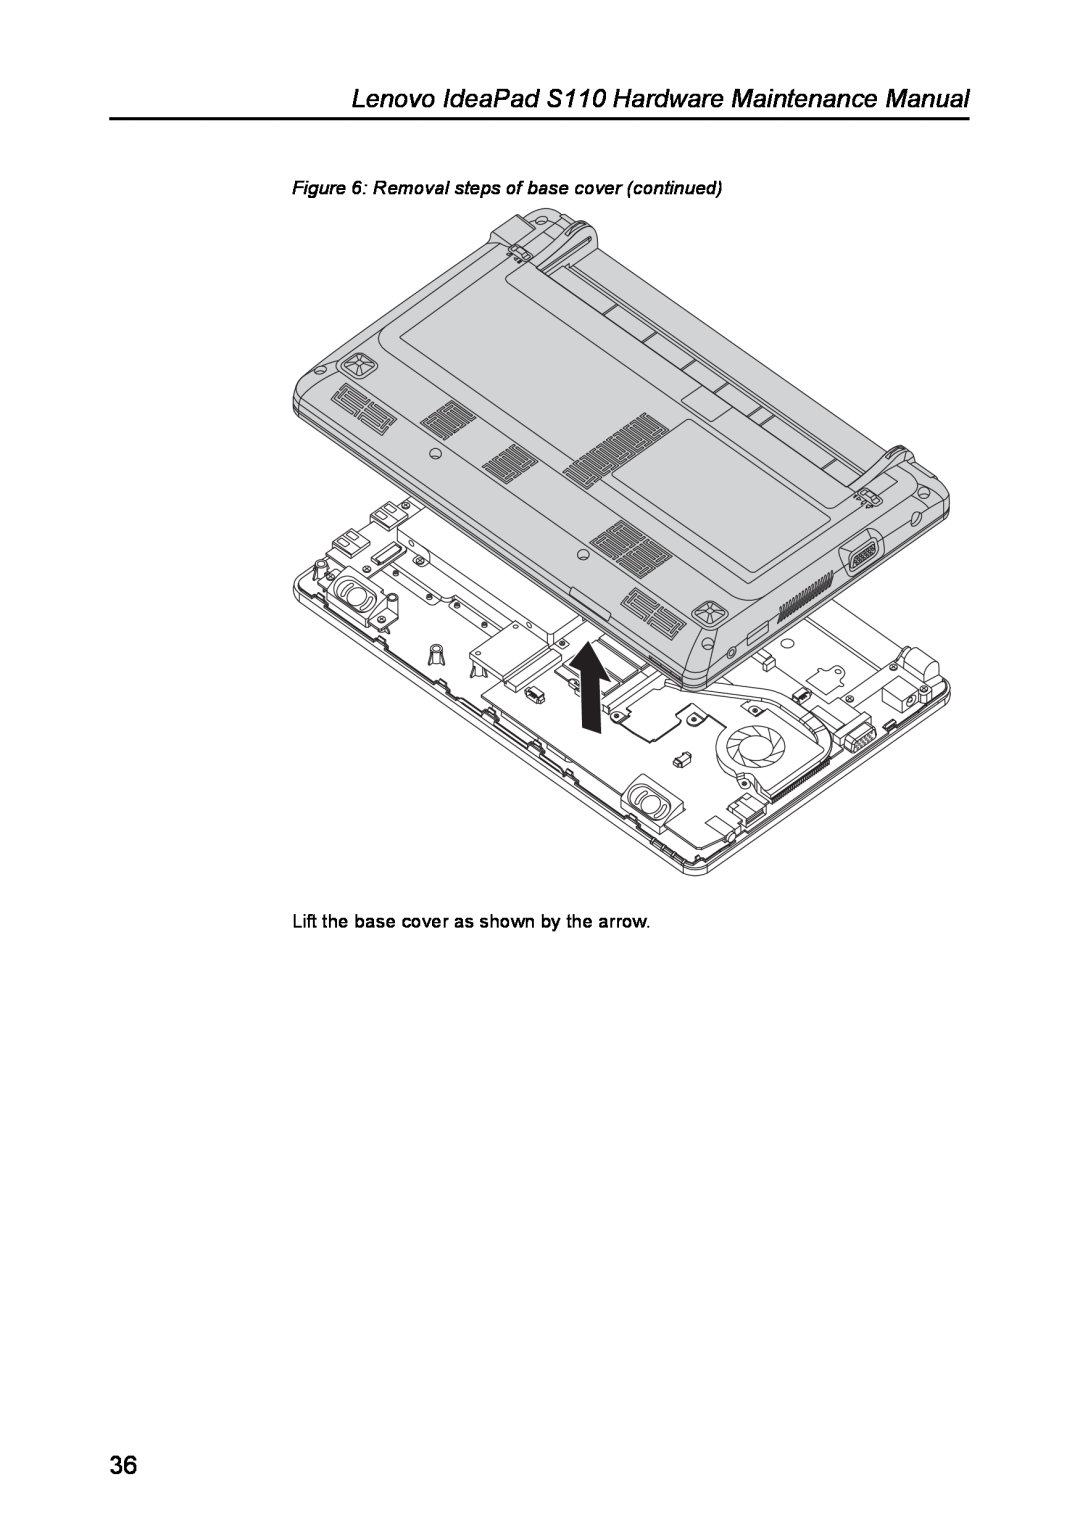 Lenovo manual Removal steps of base cover continued, Lenovo IdeaPad S110 Hardware Maintenance Manual 